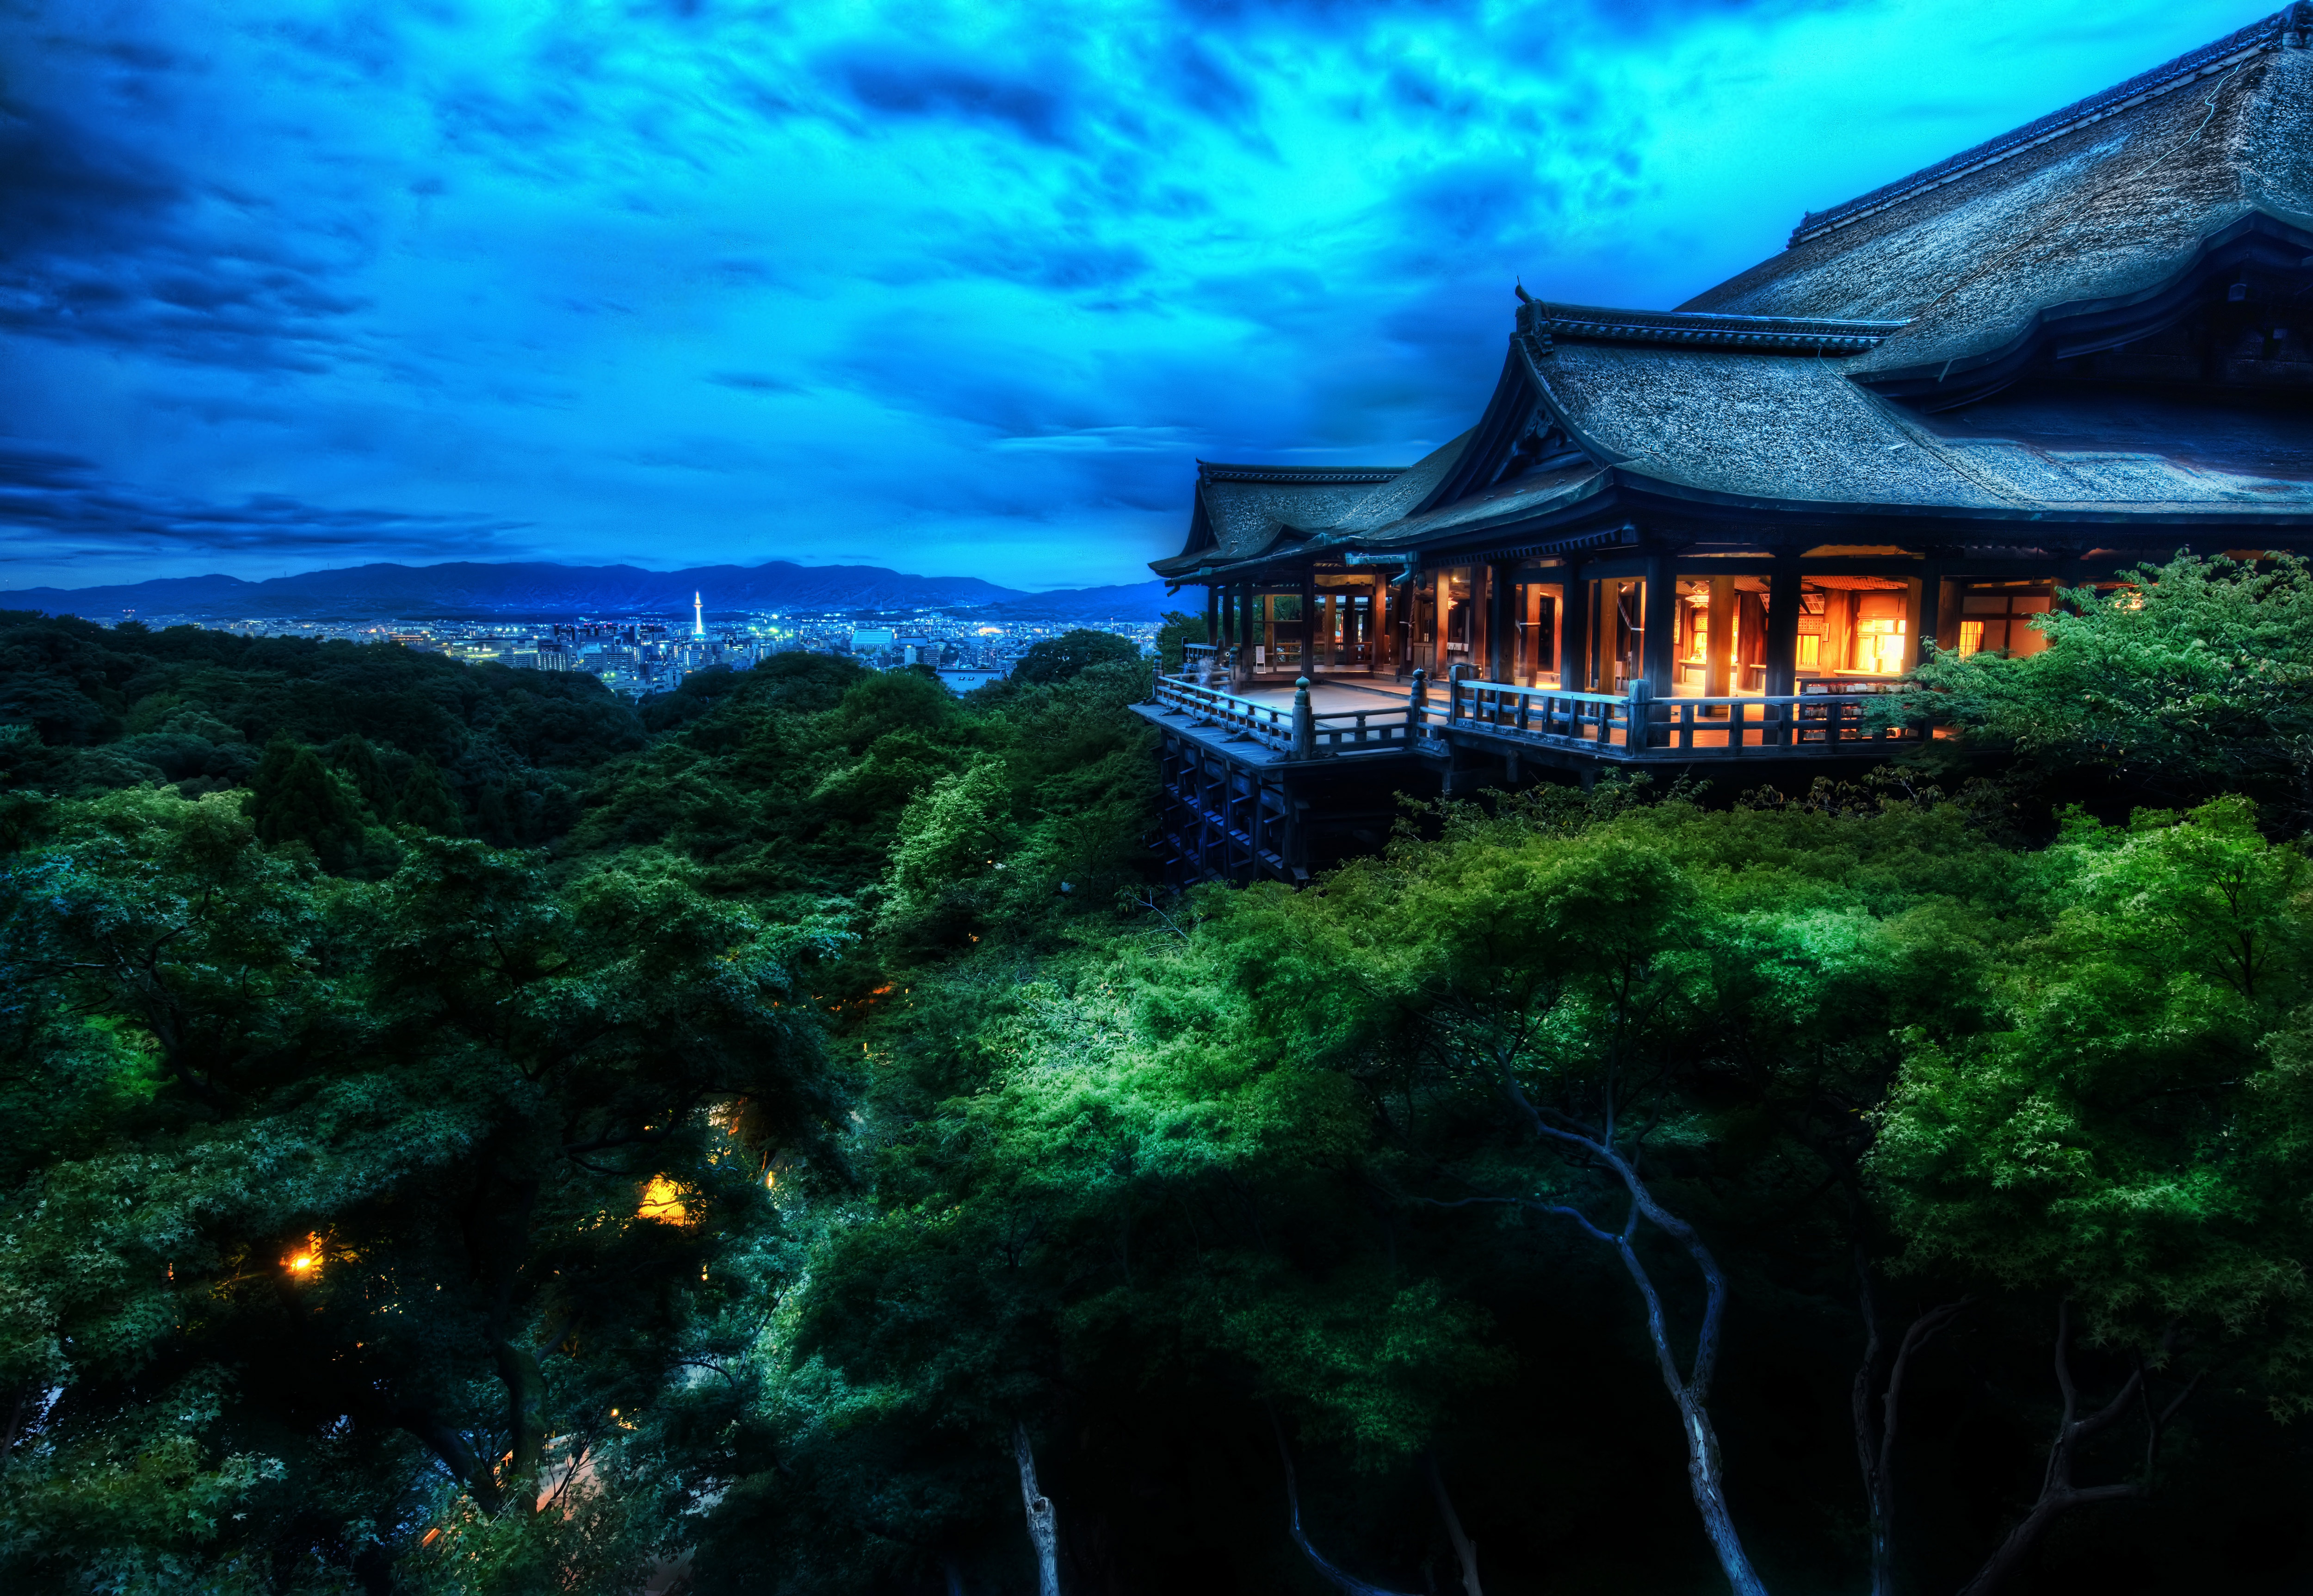 Япония, пейзажи, дома, Киото, Киемидзу -дера - обои на рабочий стол